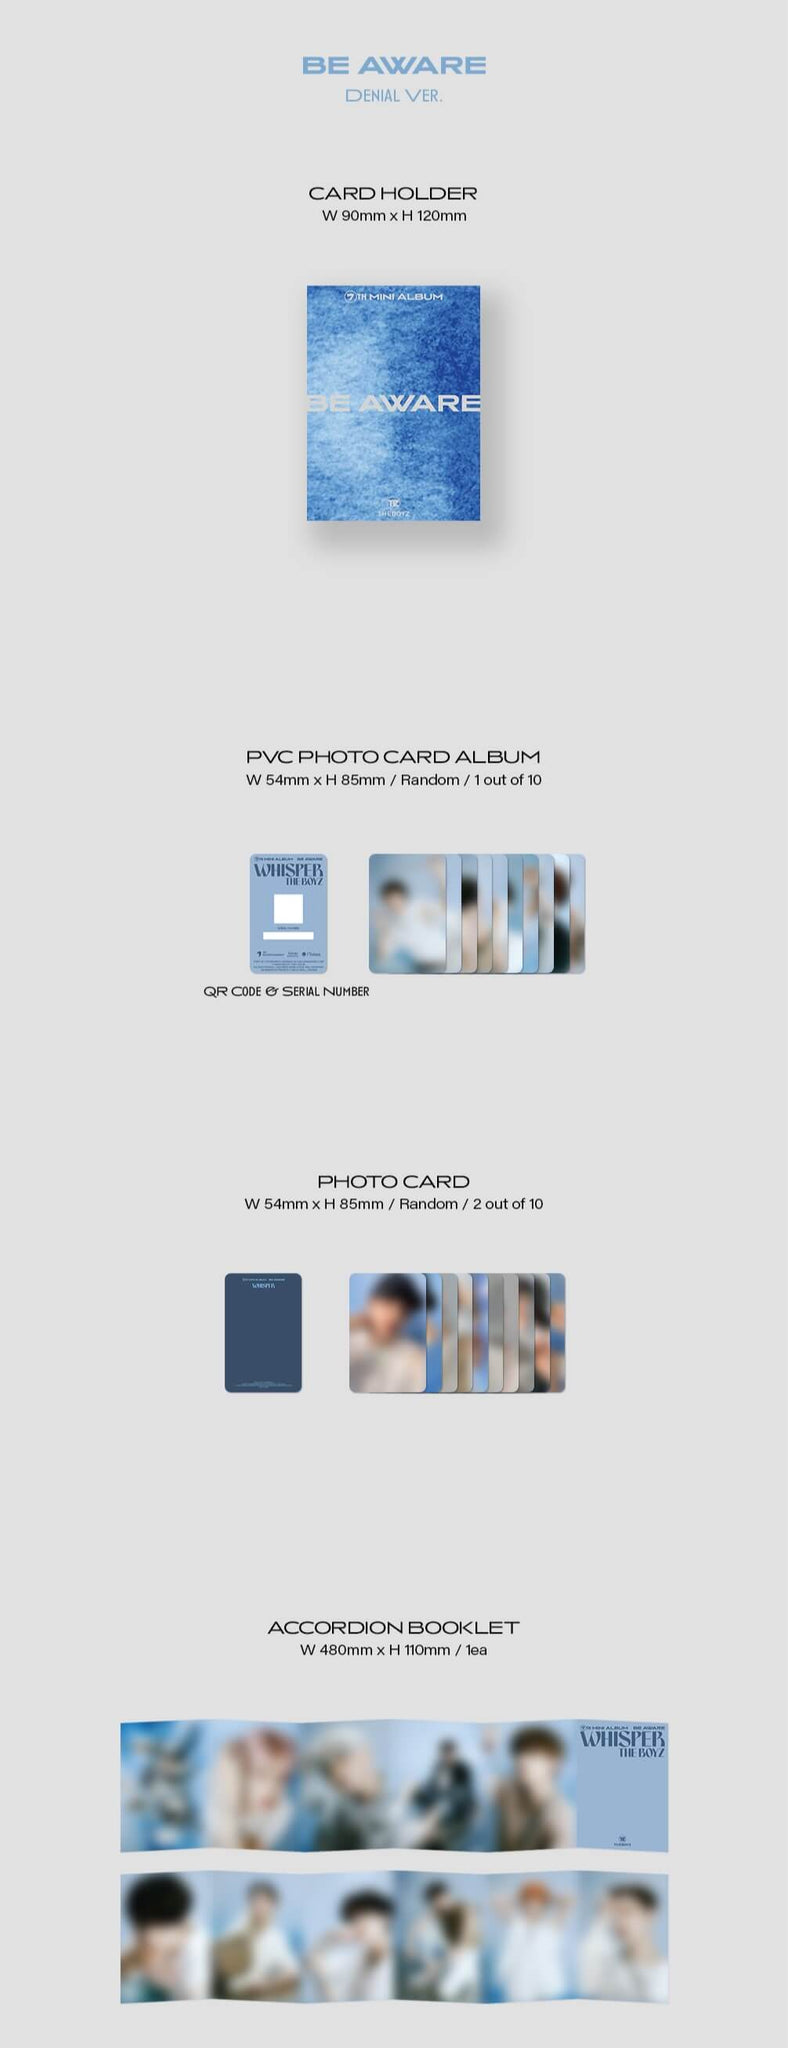 THE BOYZ BE AWARE (Platform Version) - Denial Version Inclusions Card Holder PVC Photocard Album Photocards Accordion Booklet